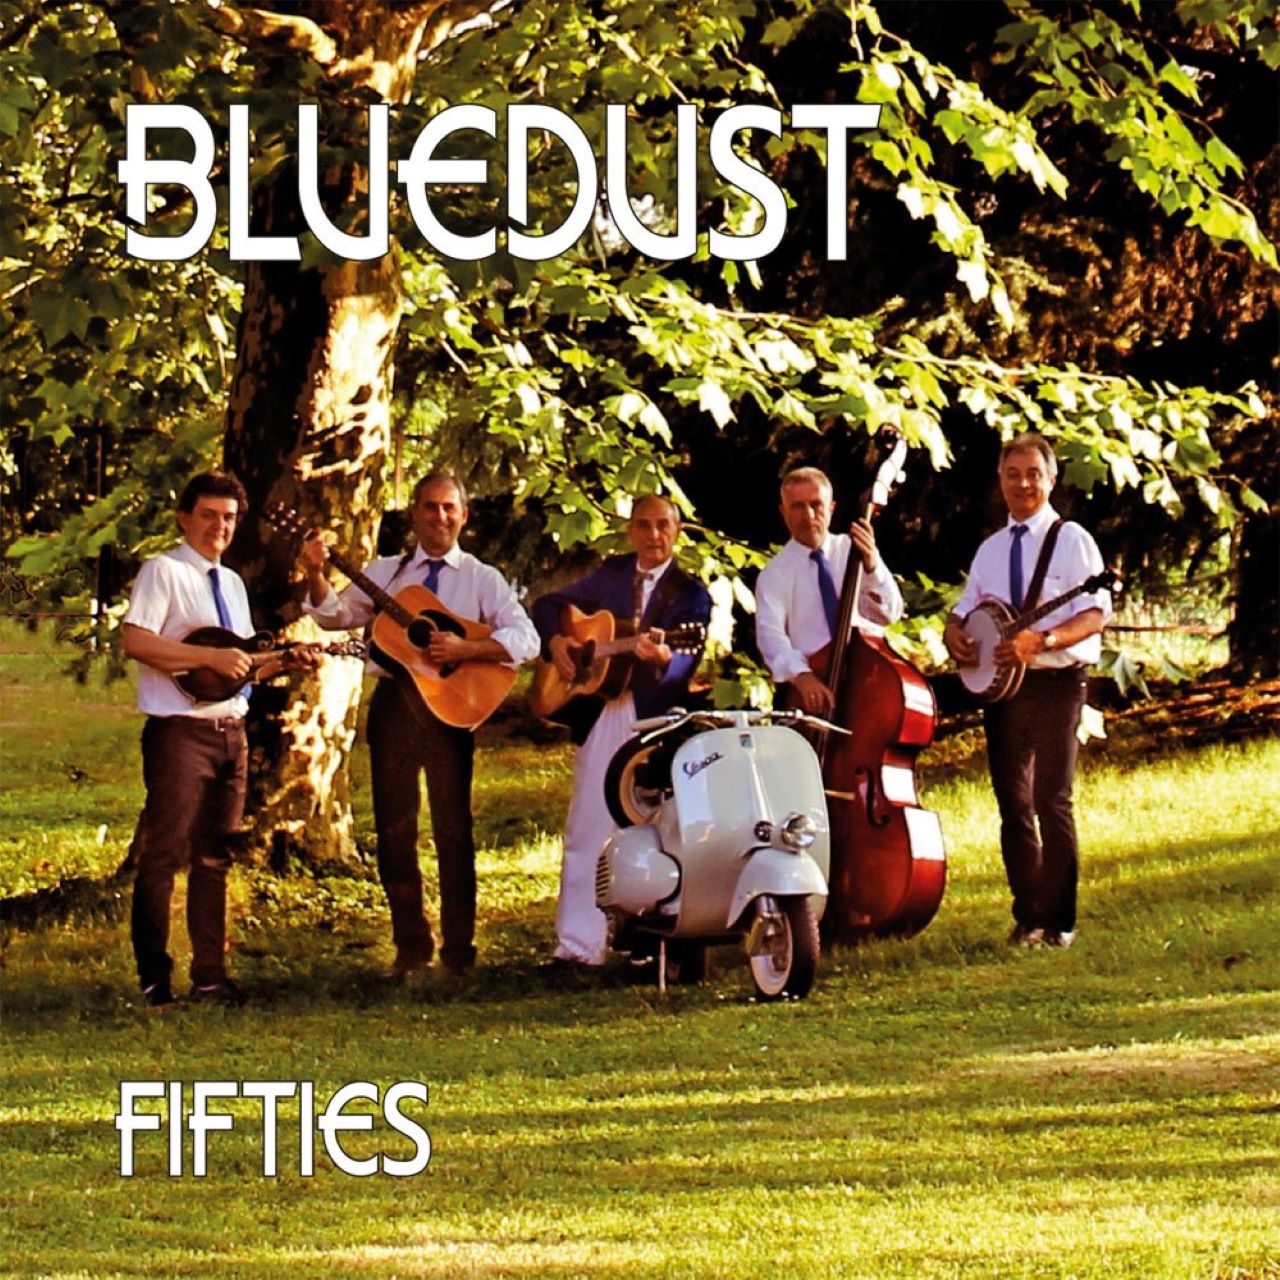 Bluedust - Fifties cover album